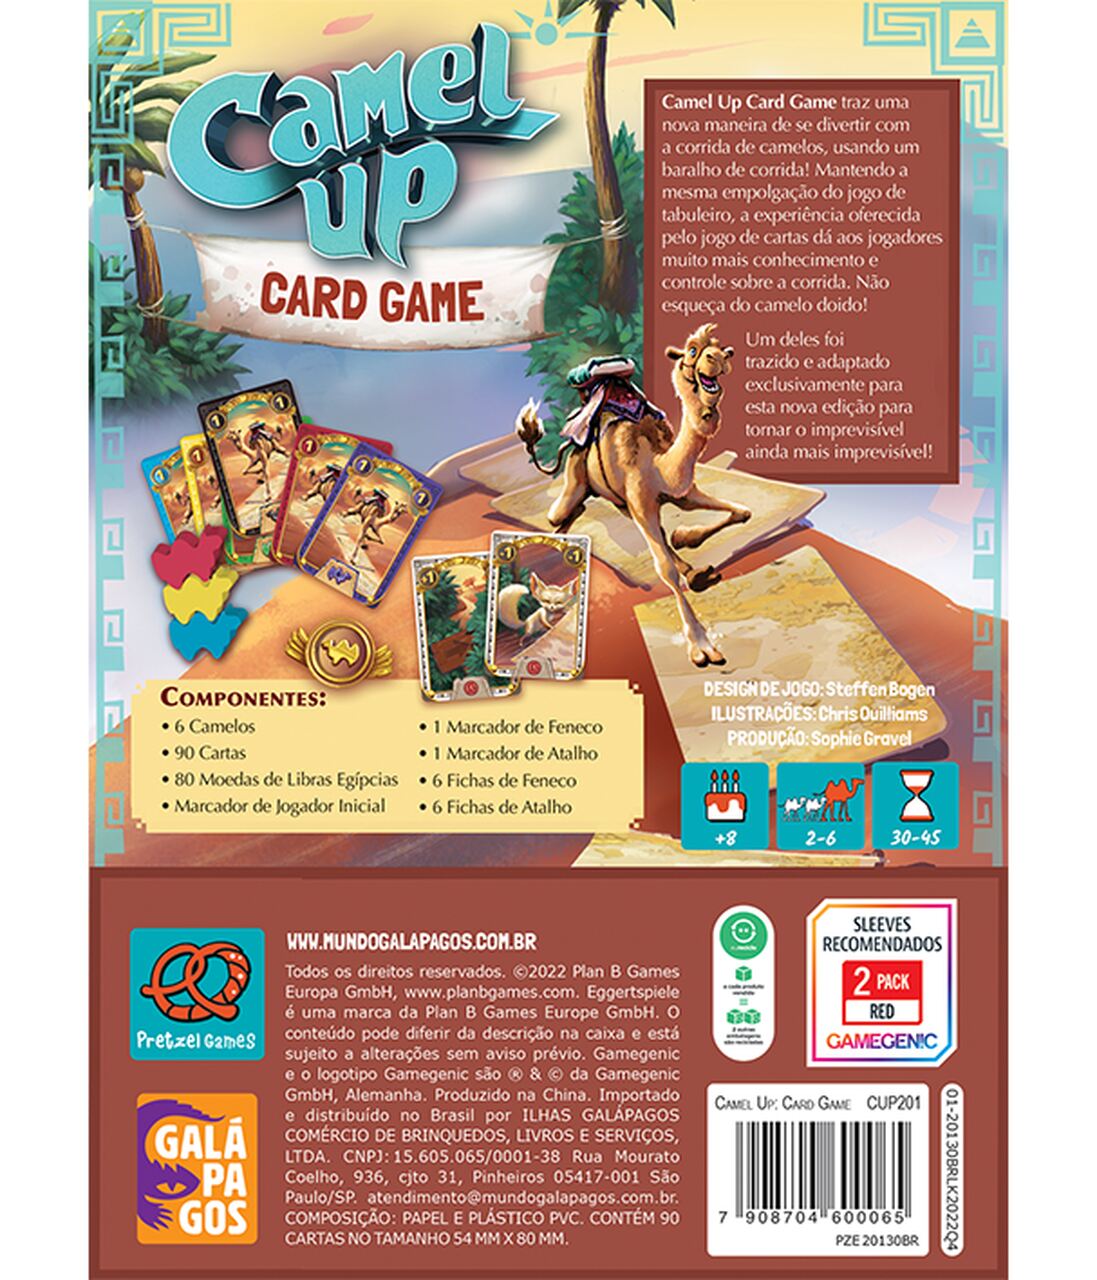 Camel Up: Card Game